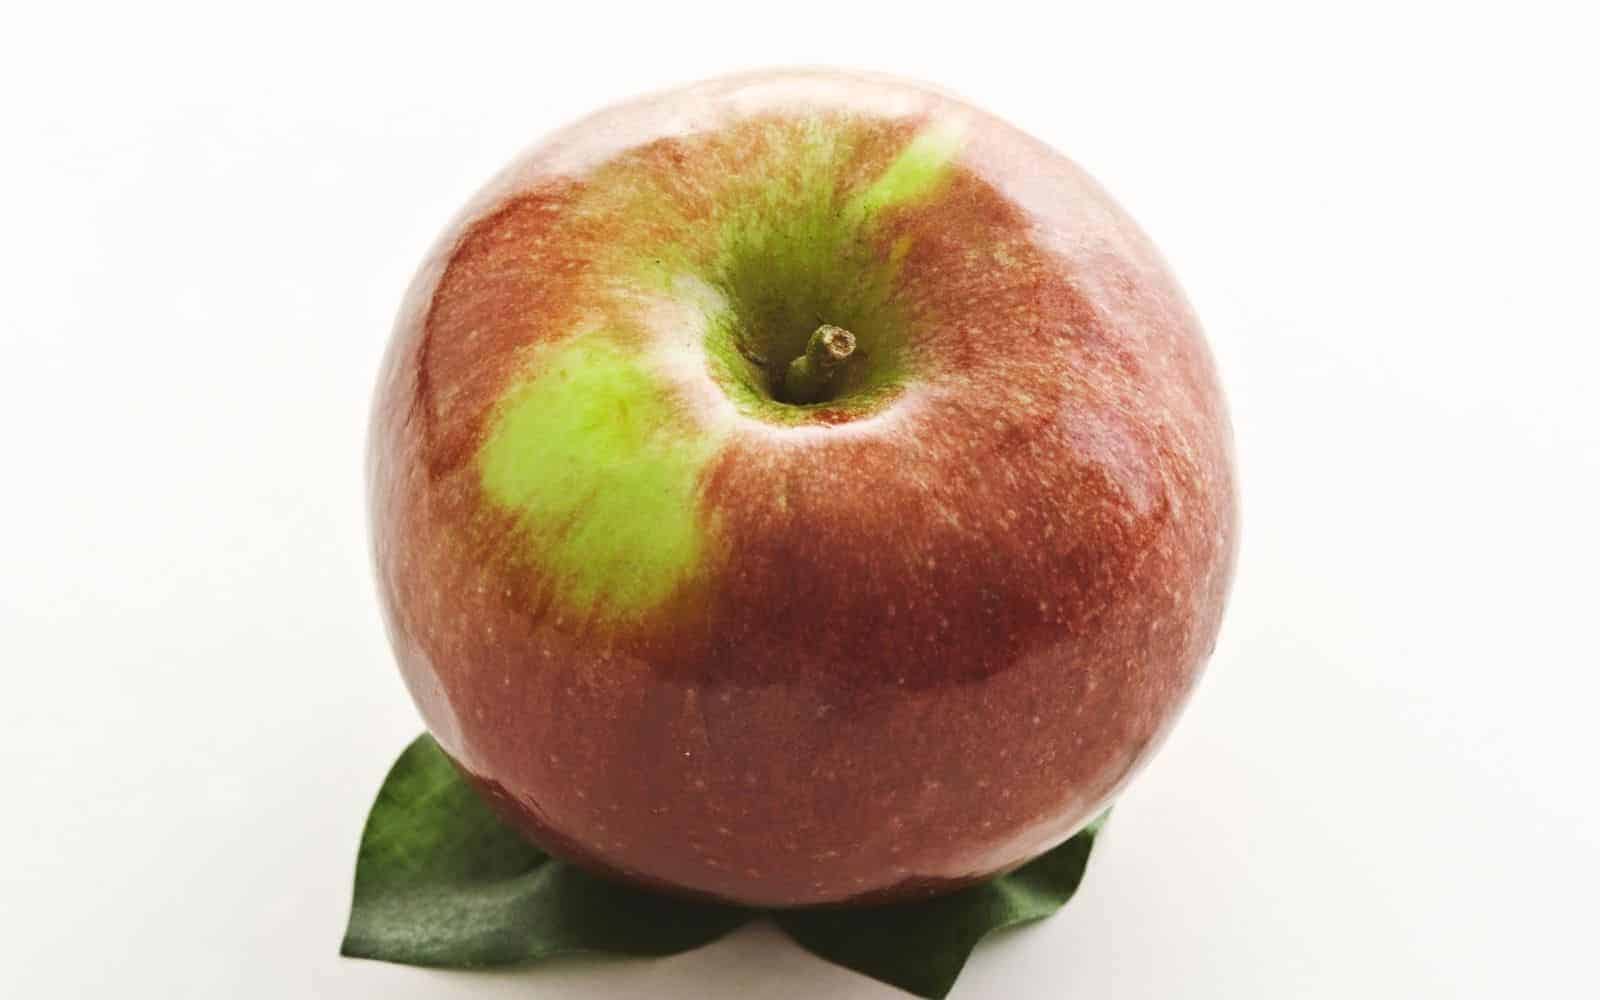 Macoun apple